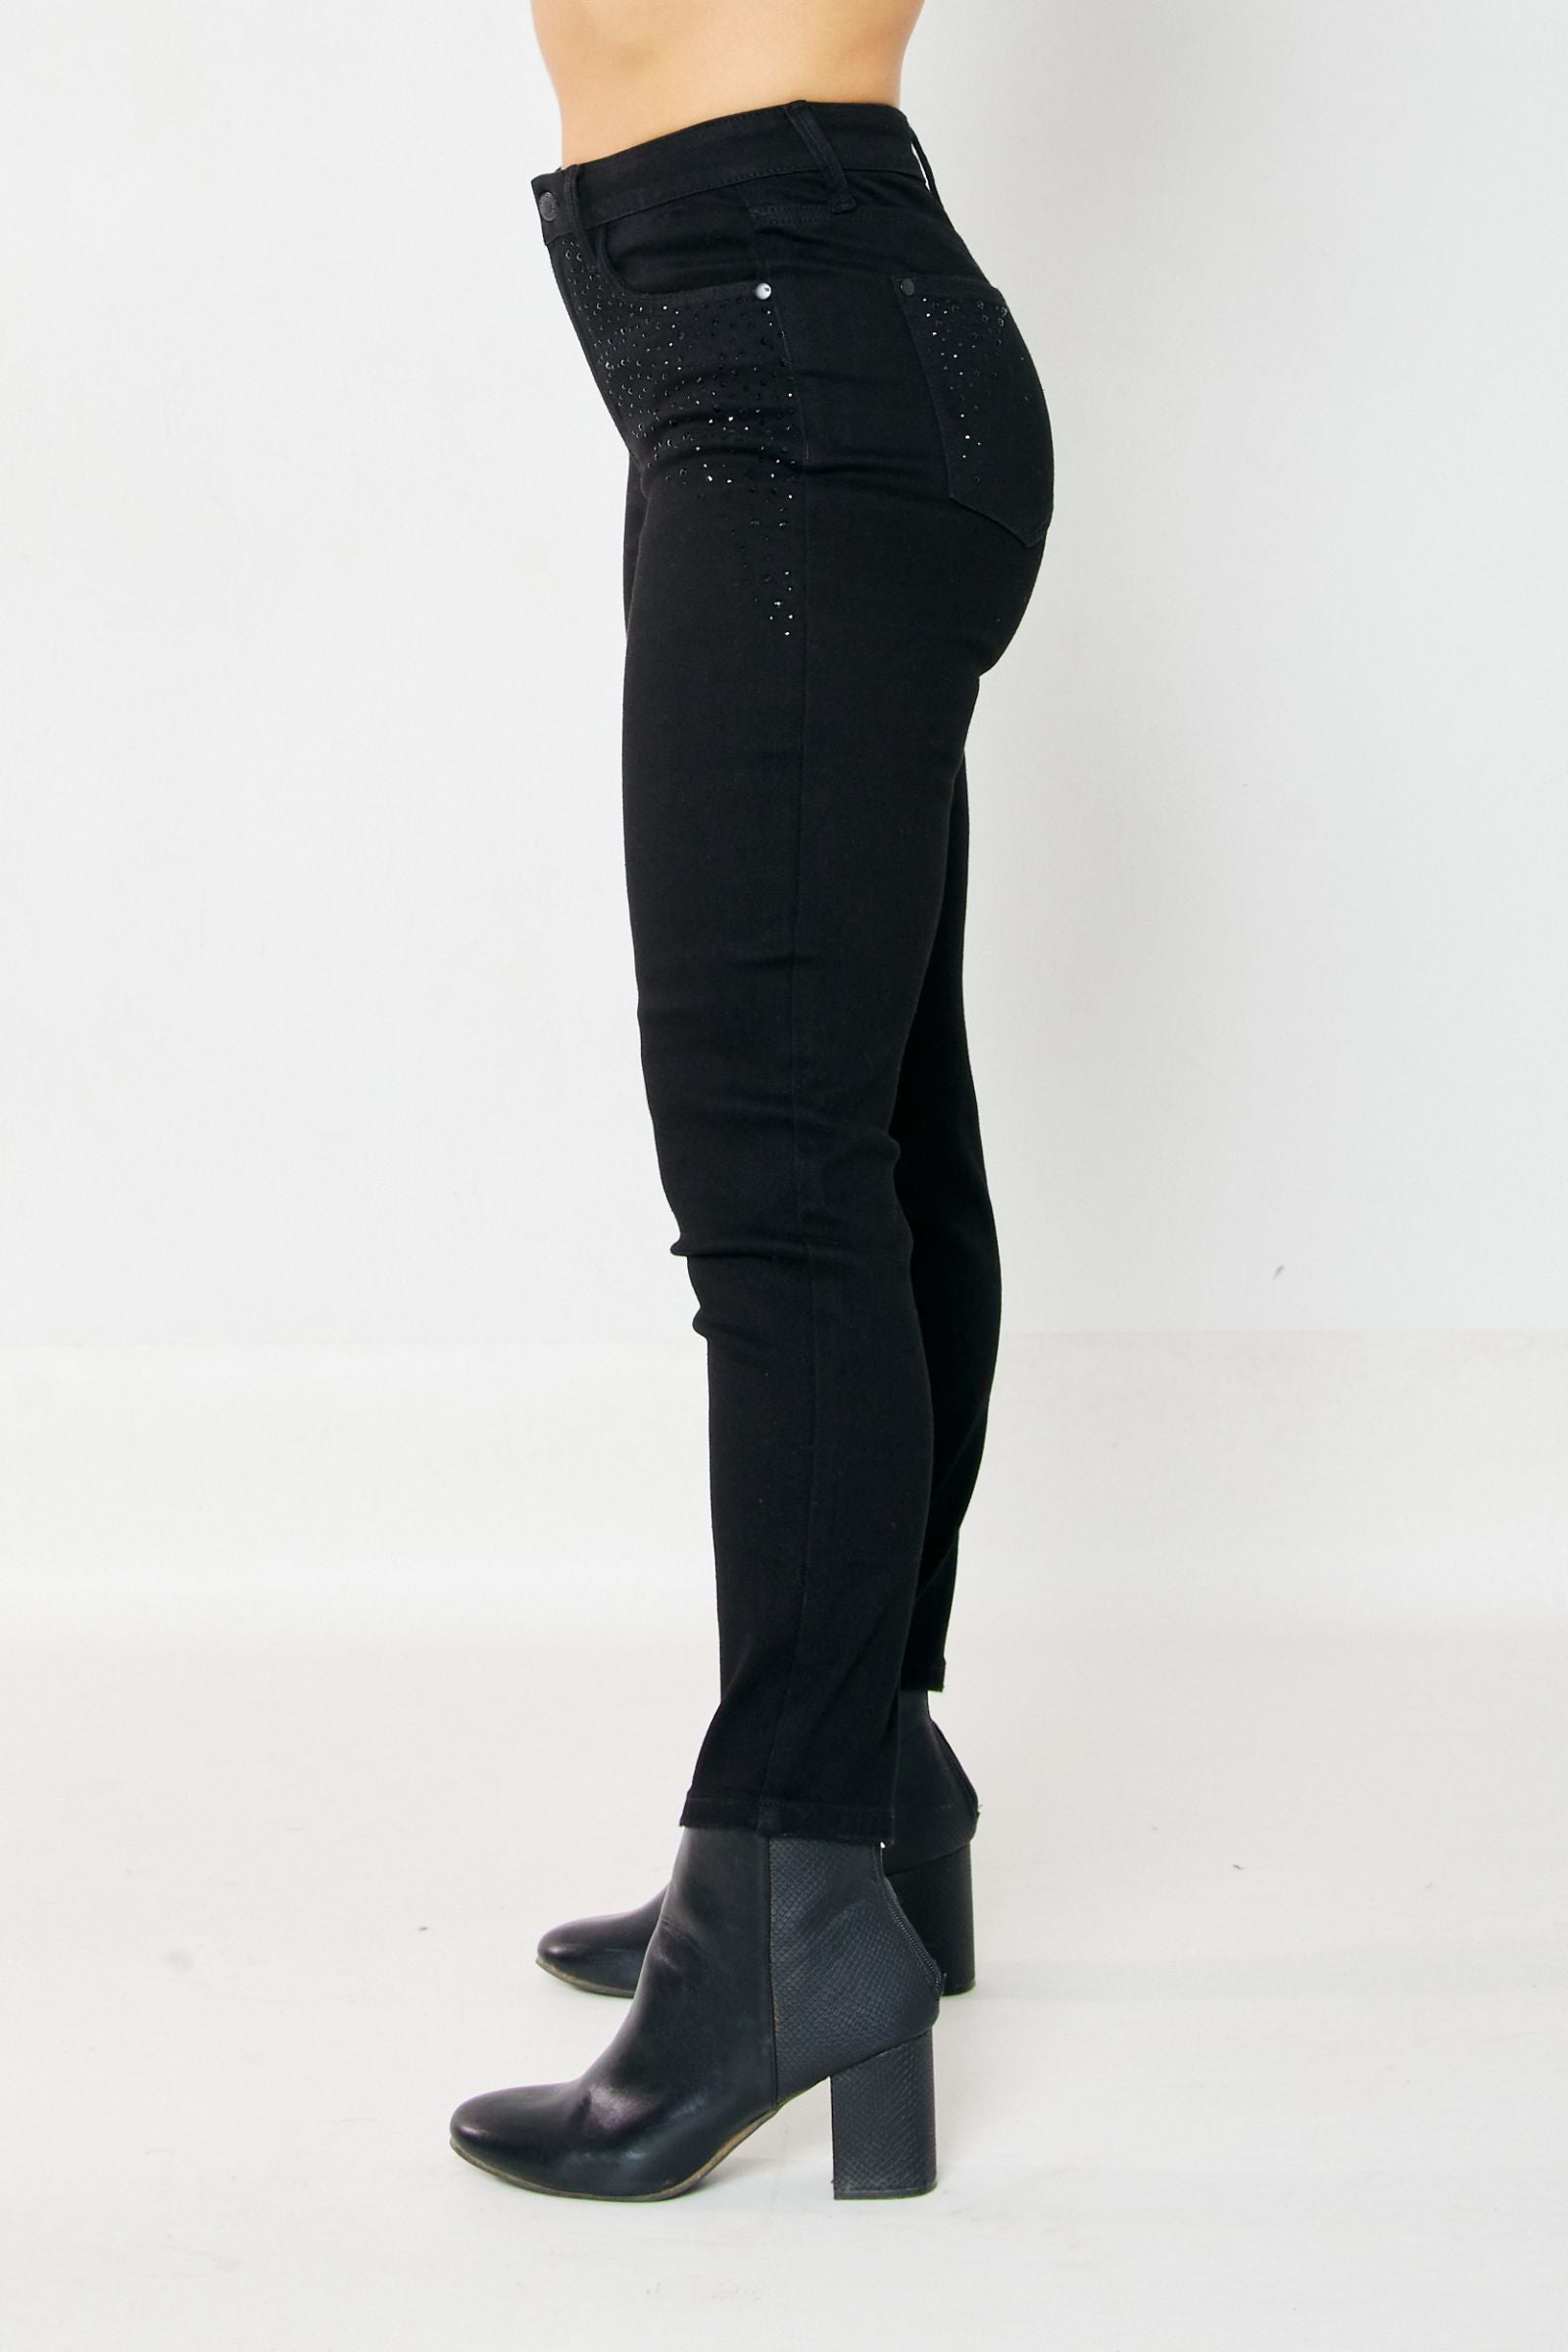 judy blue black slim jeans with rhinestone embellishment